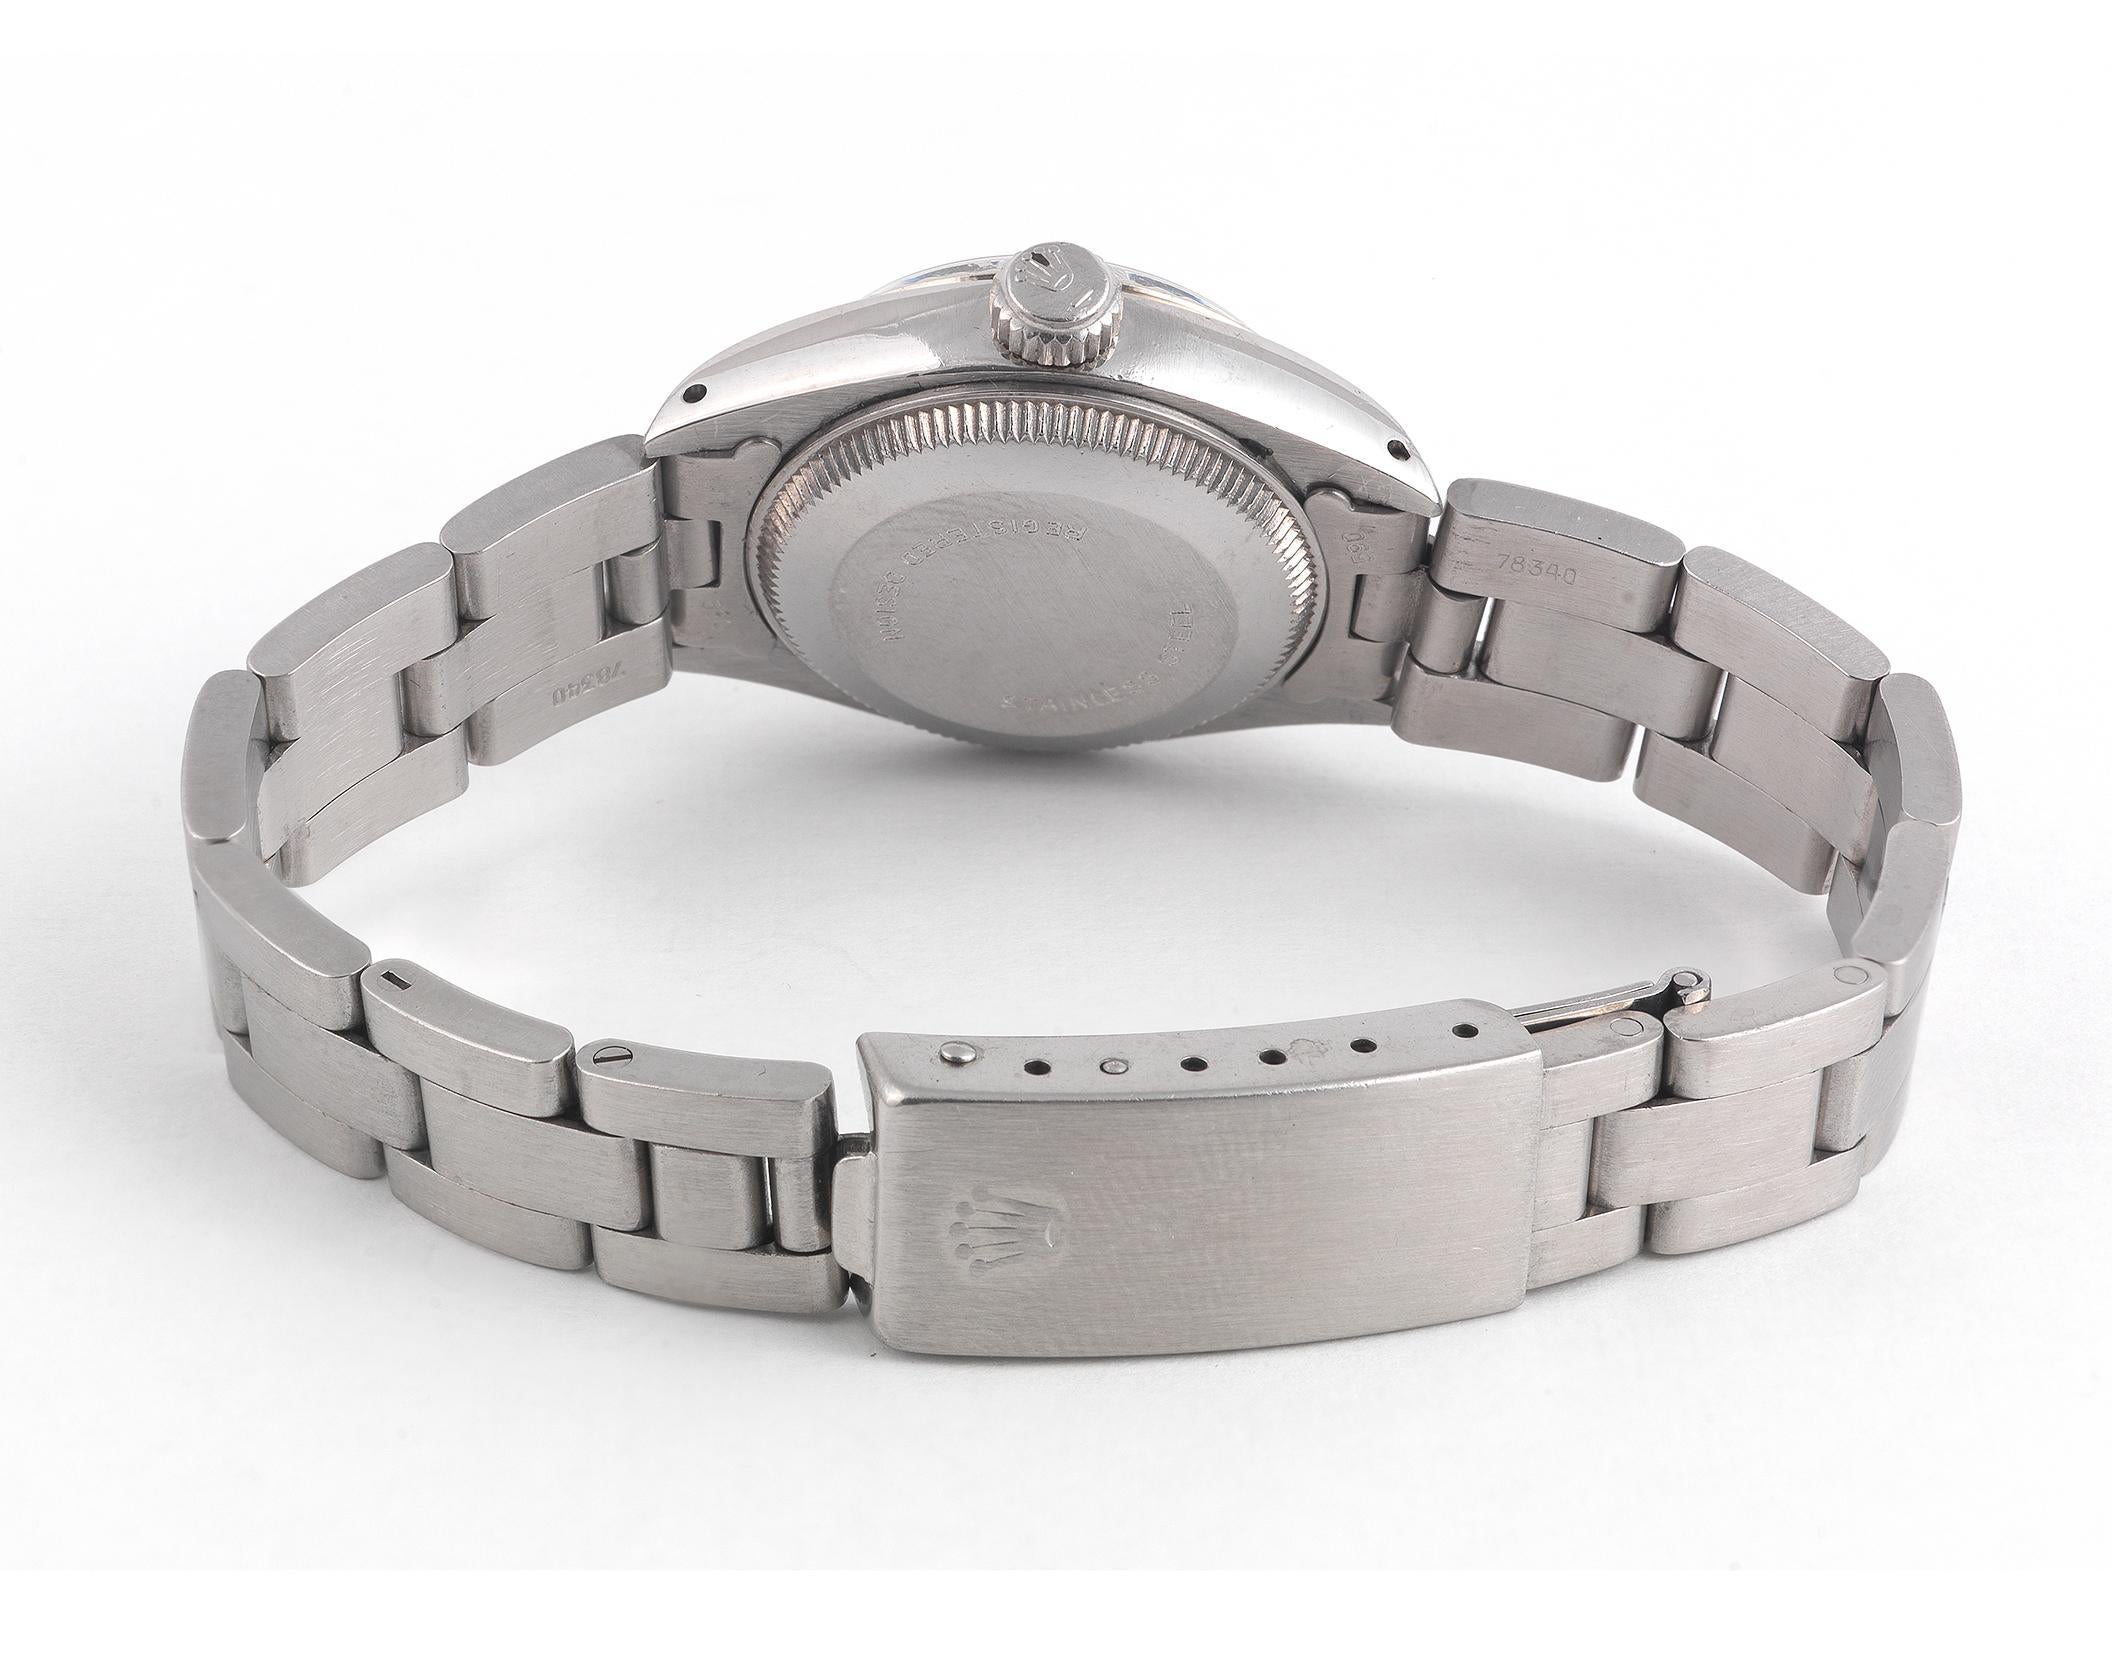 Contemporary Rolex a Ladies Stainless Steel Automatic Calendar Bracelet Watch